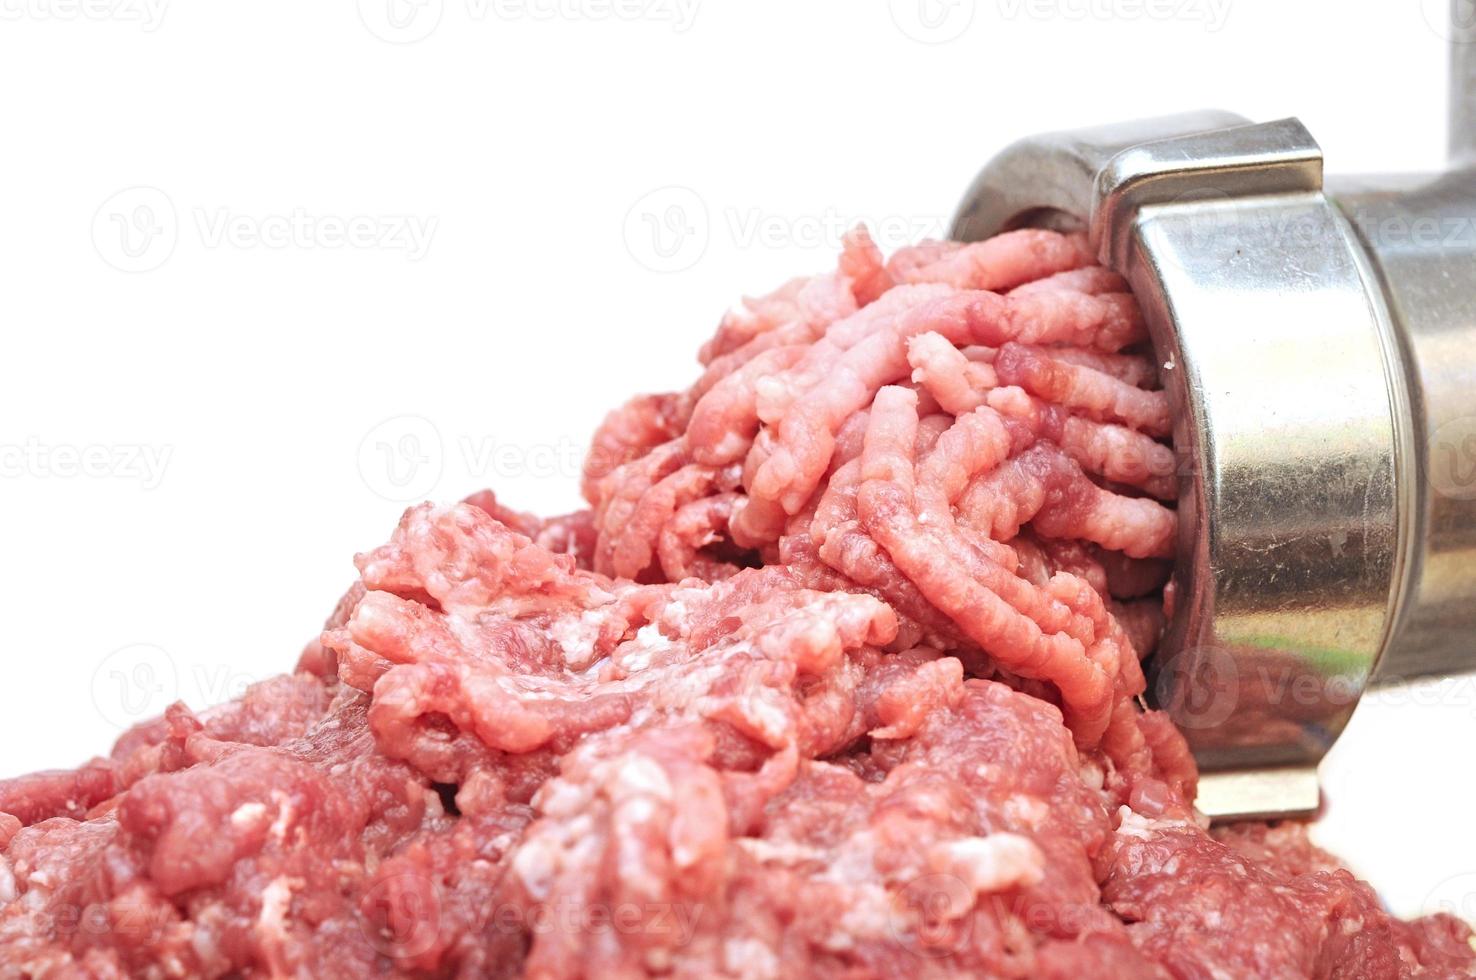 Meat grinder close up photo